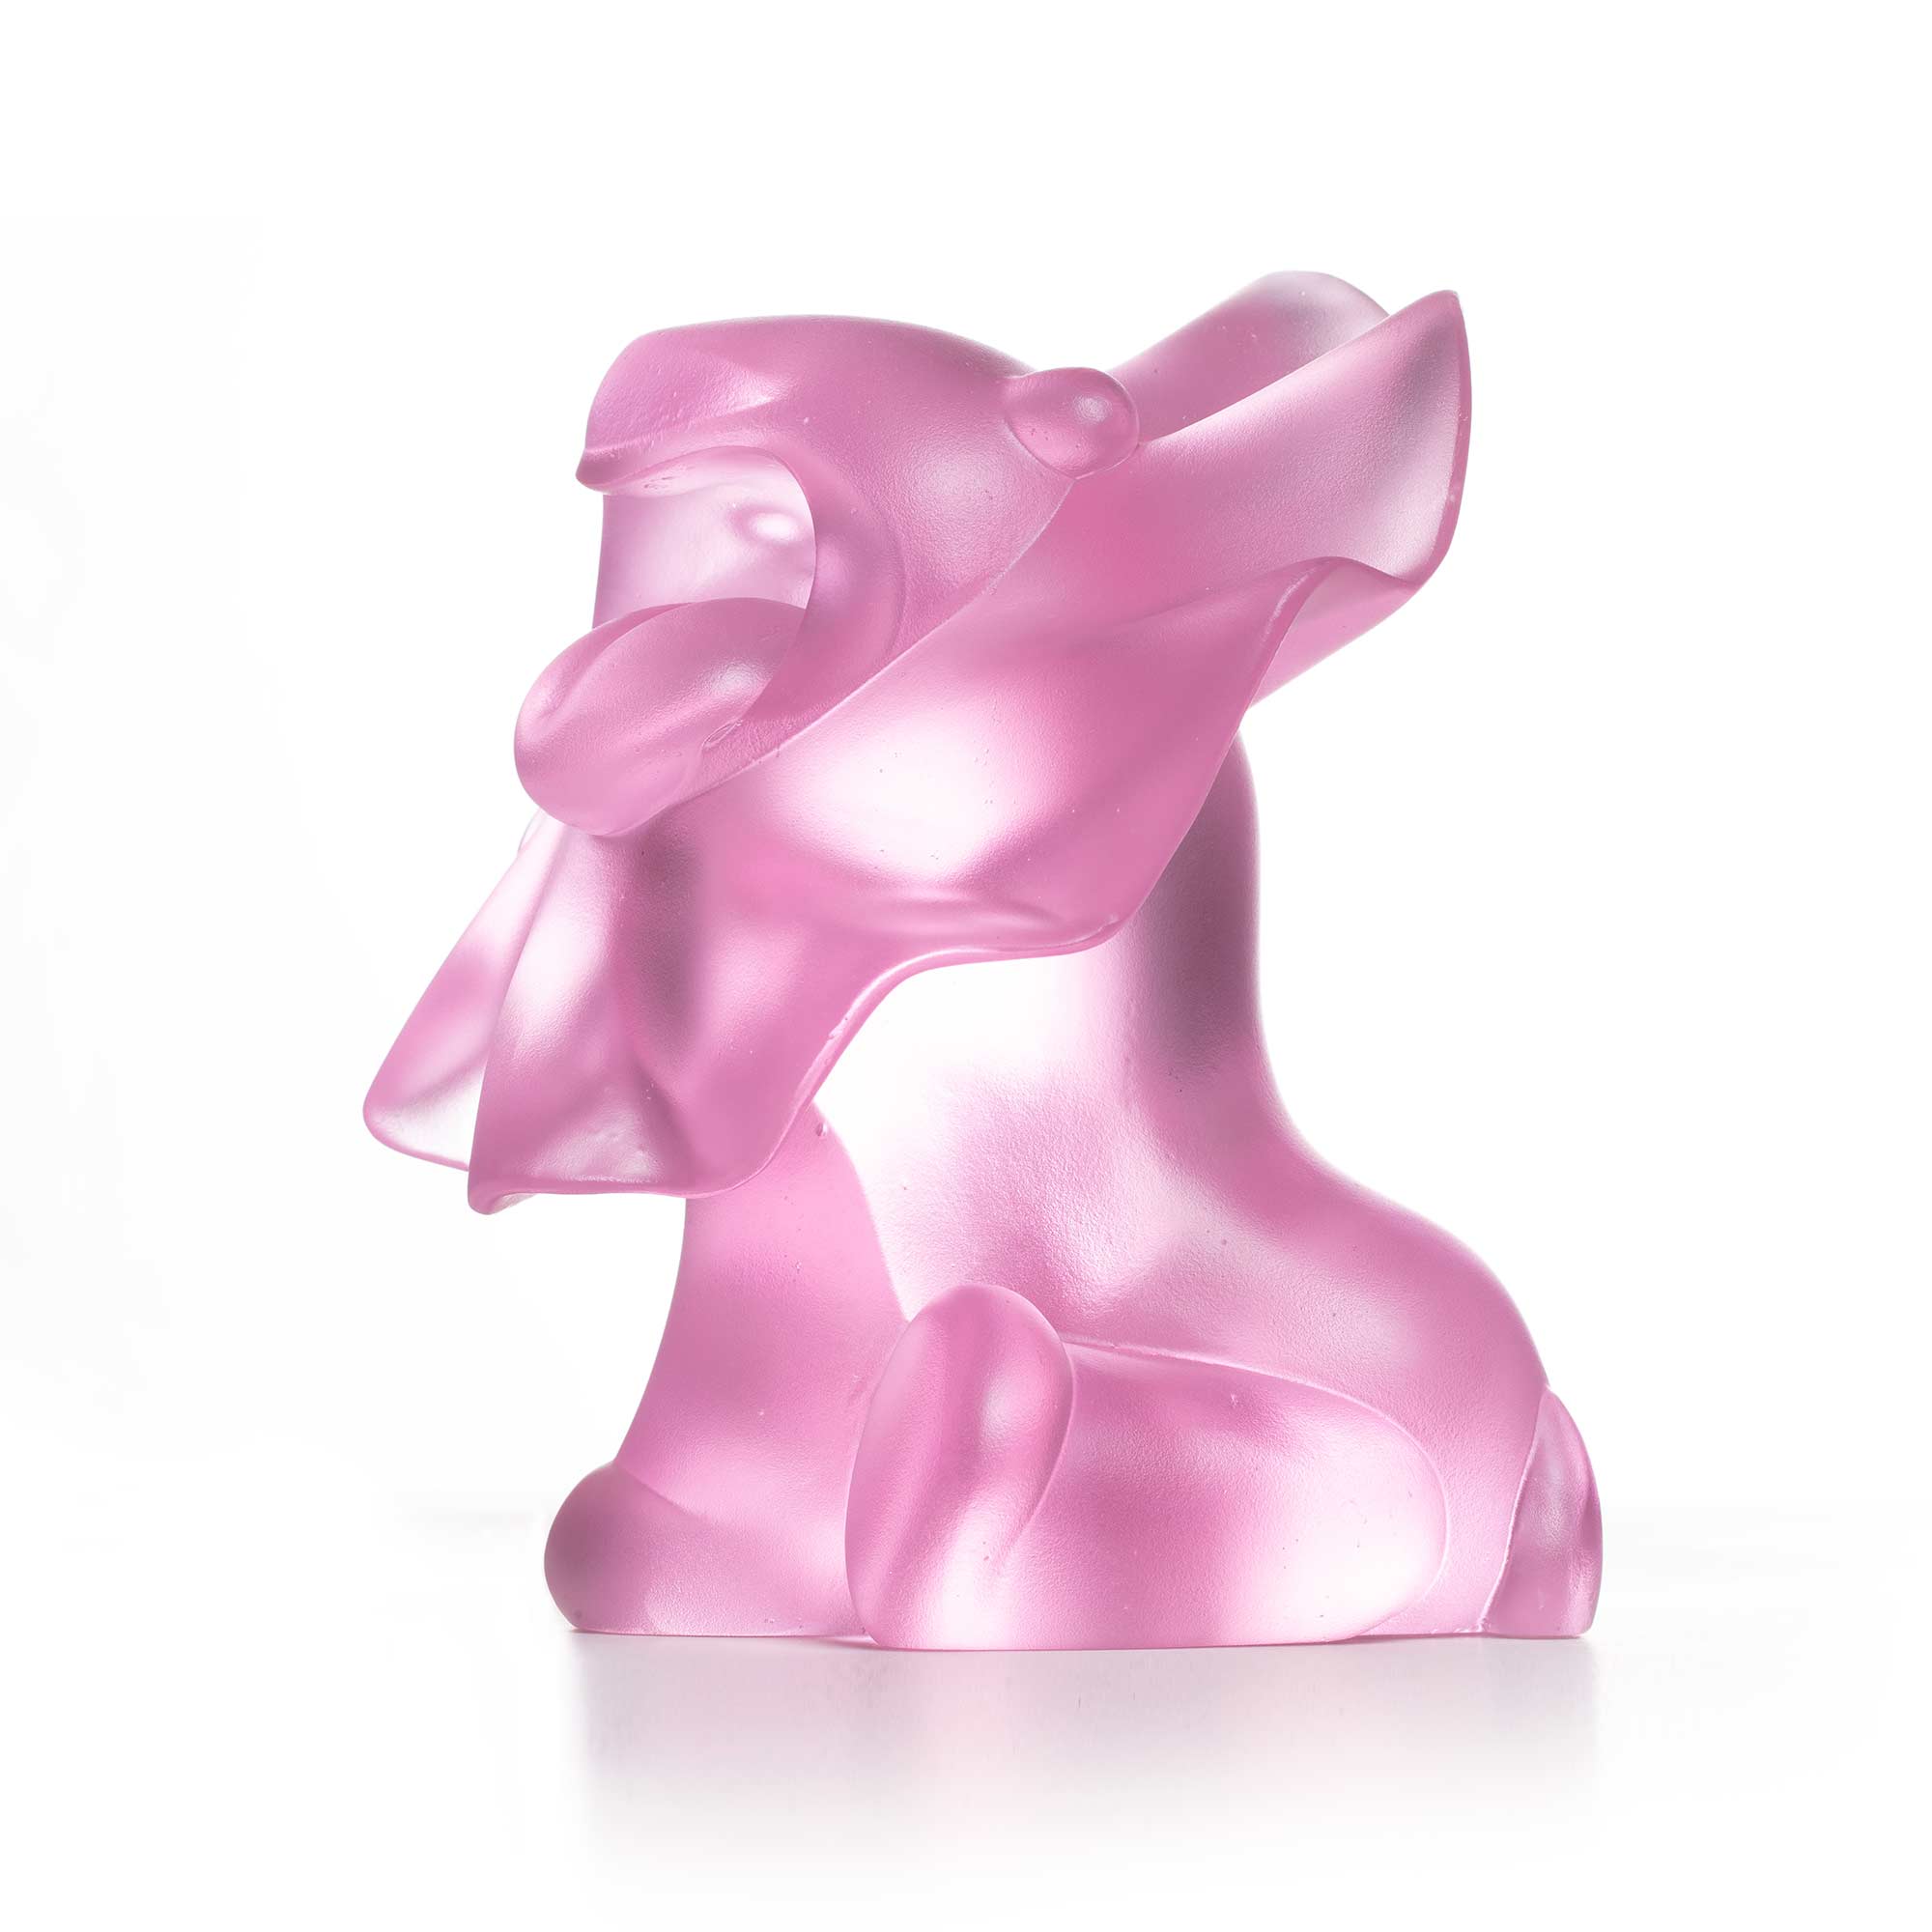 Lion roar, pink crystal sculpture,  15 cm height, by artist Ferdi B Dick, side view